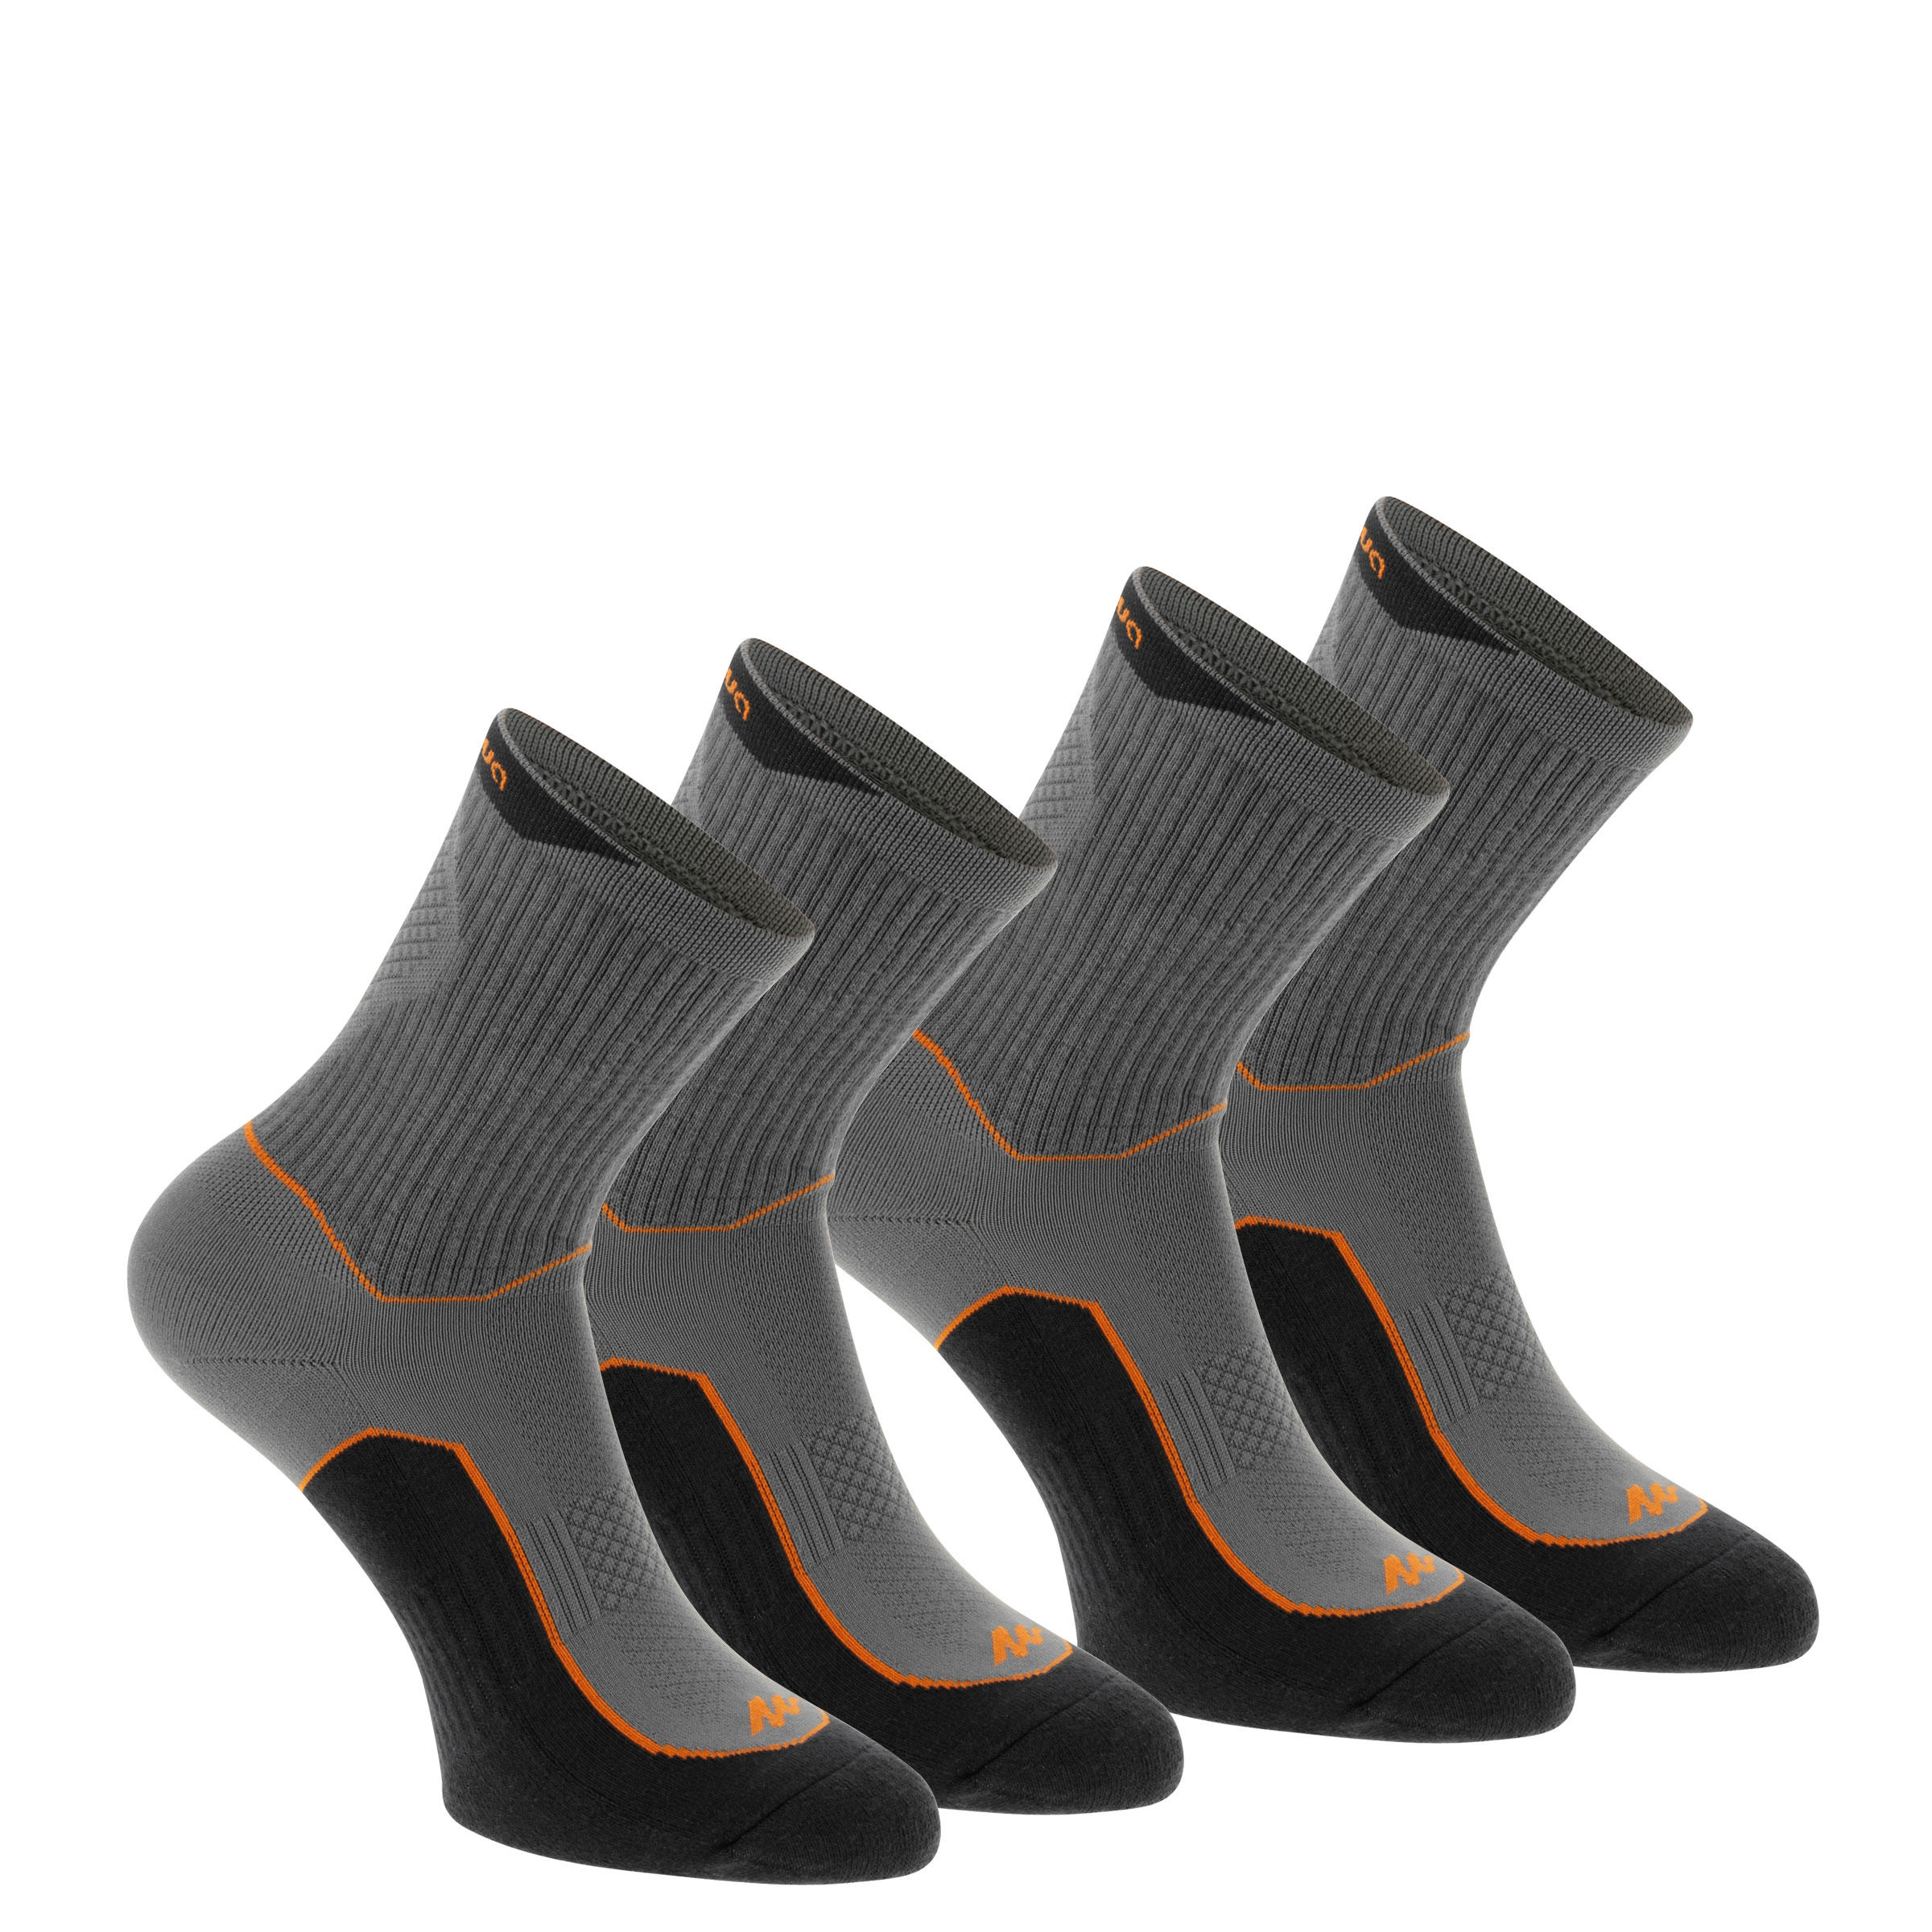 Arpenaz 100 Adult High Top Nature Hiking Socks 2 pairs - Grey 1/8